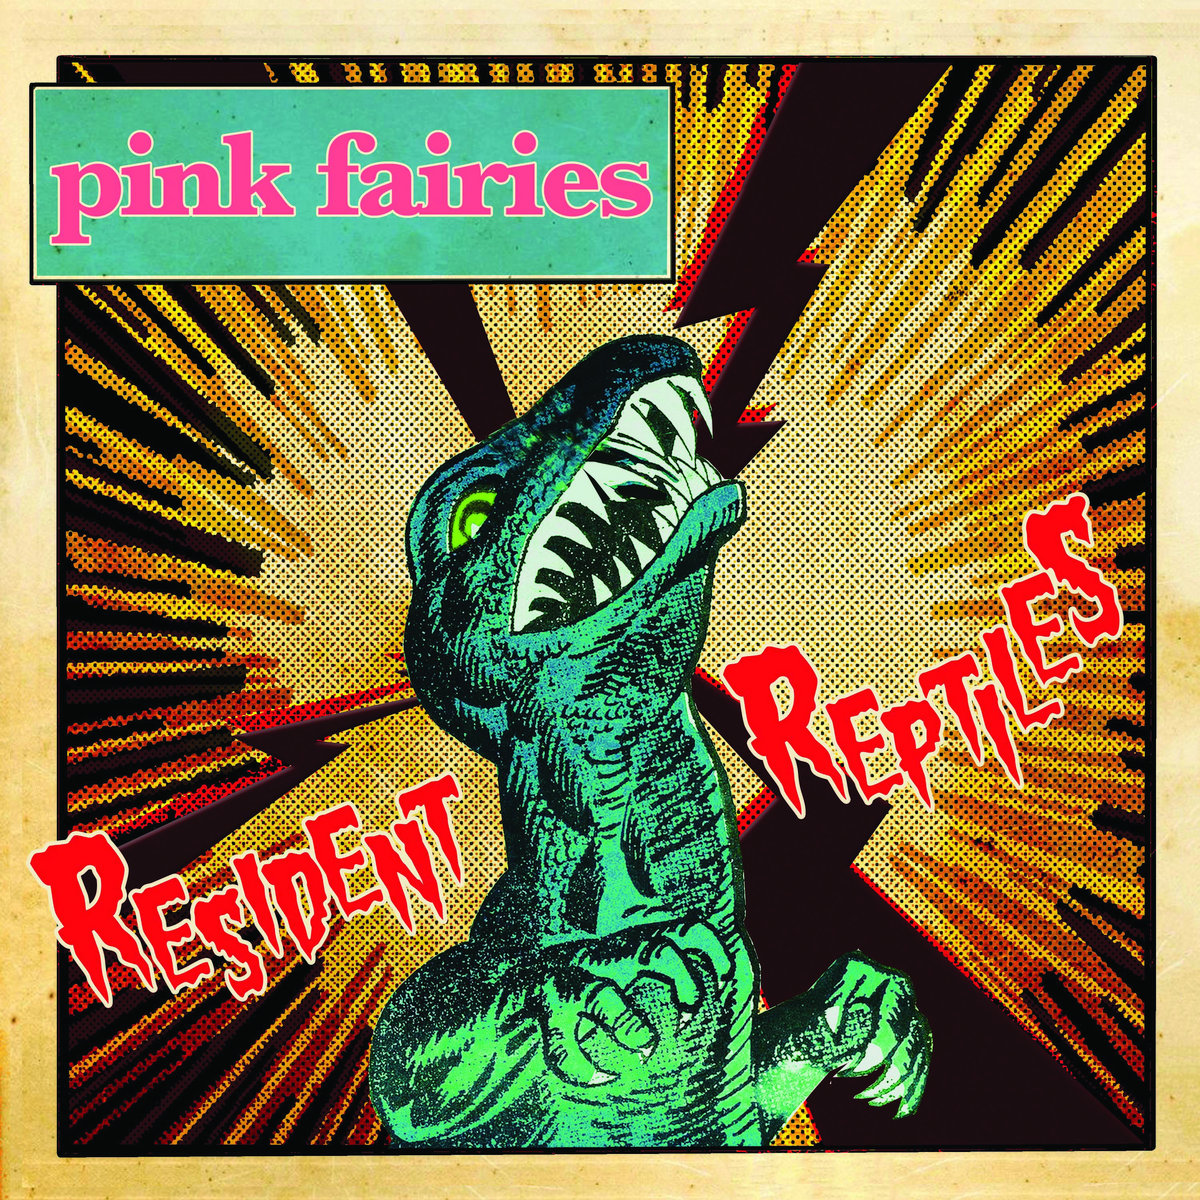 Resultado de imagen de Pink Fairies - Resident Reptiles